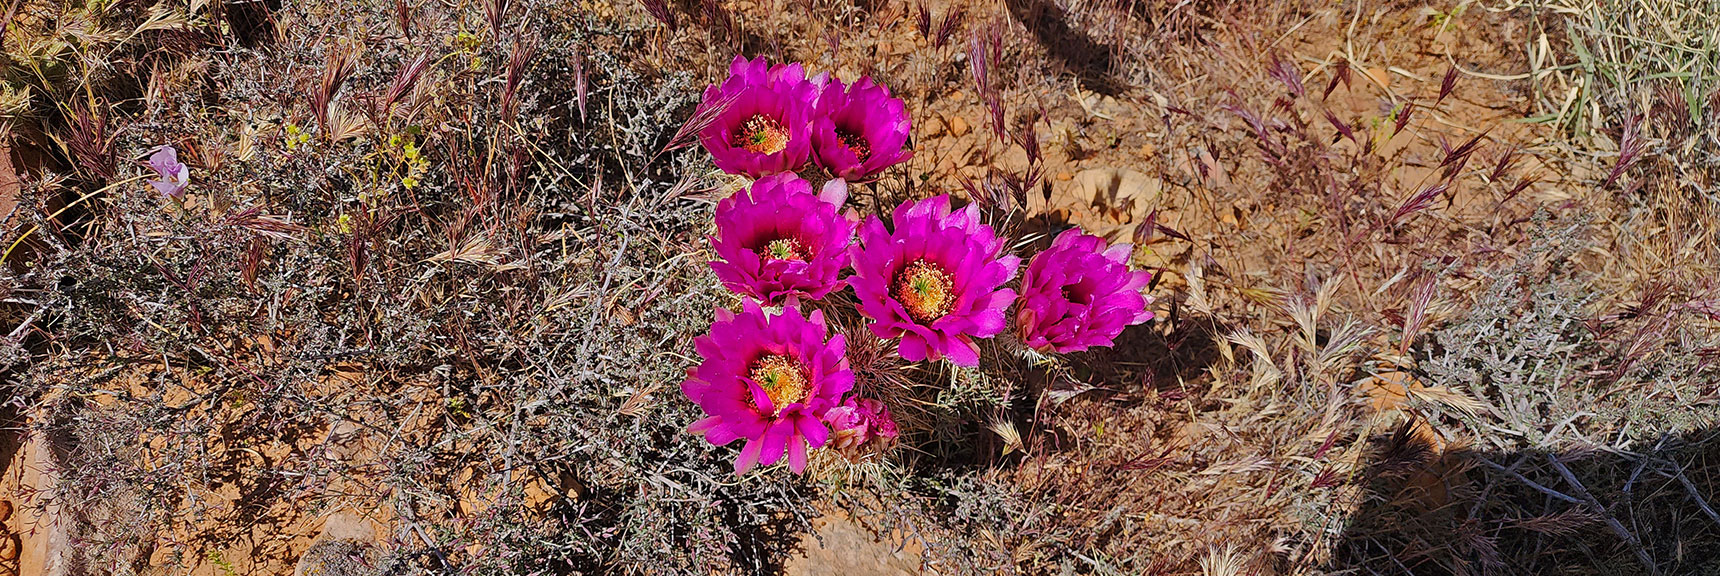 Strawberry Hedgehog Cactus | Juniper Canyon | Red Rock Canyon NCA, Nevada